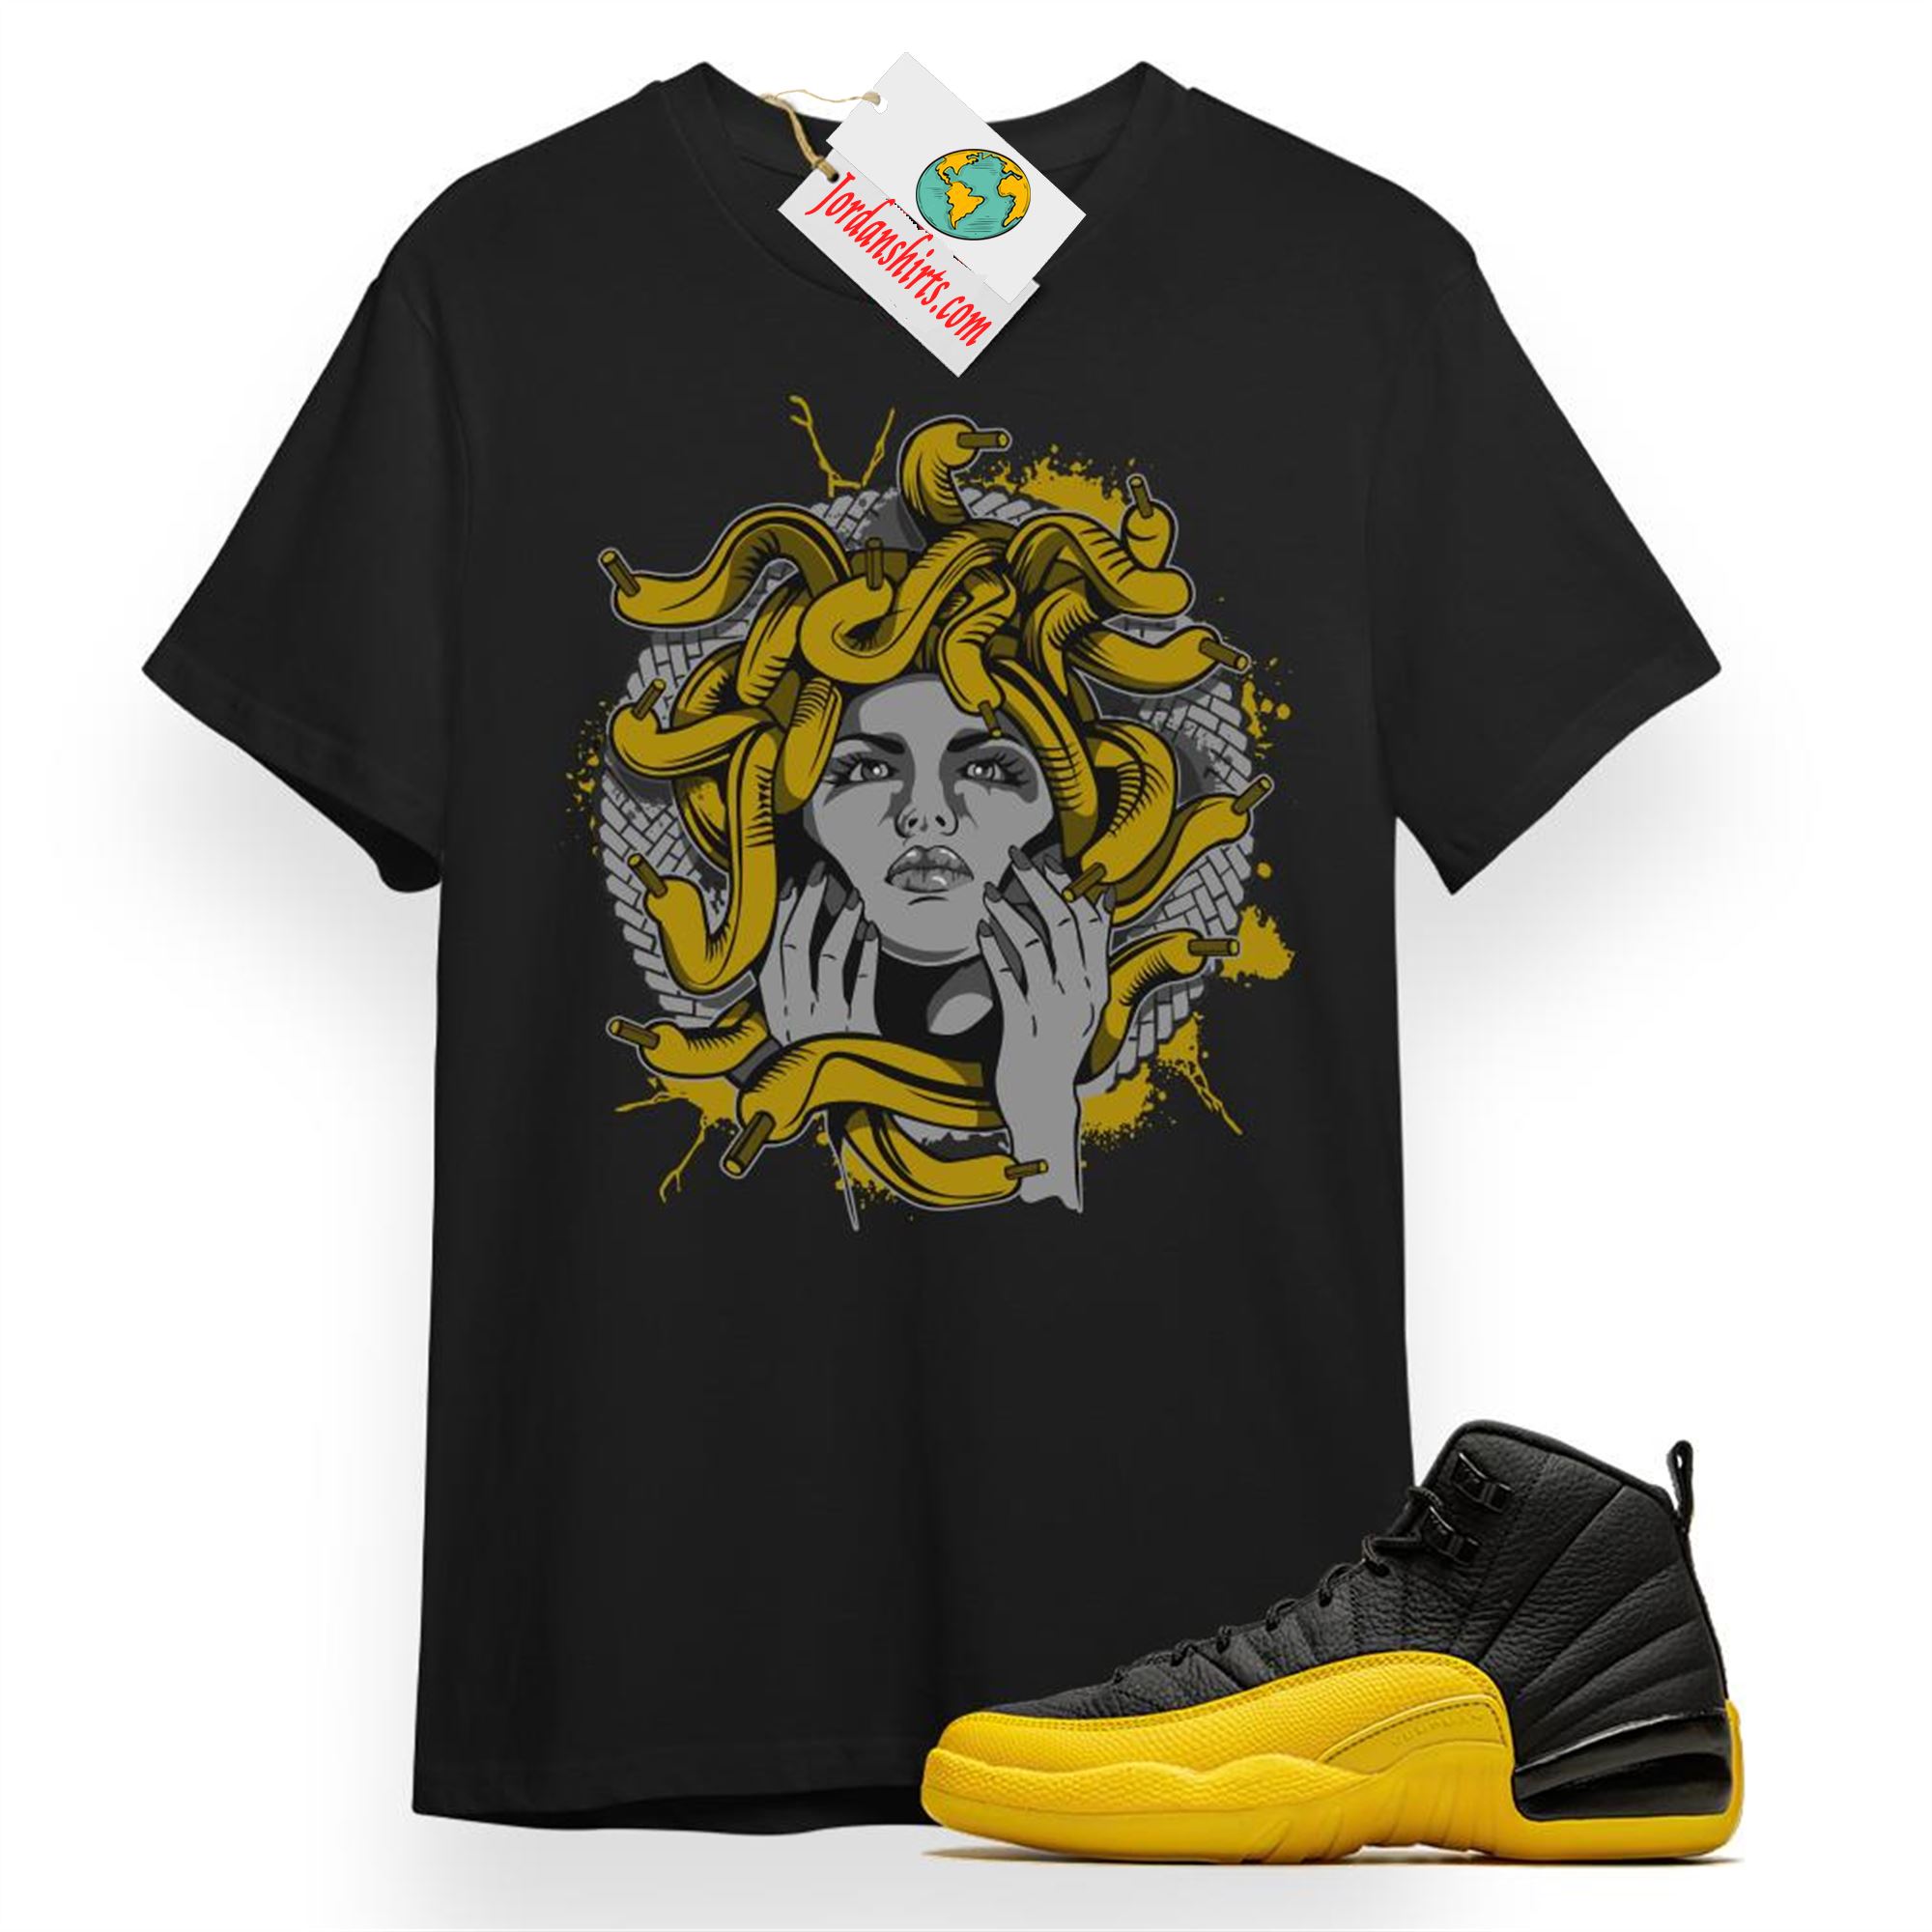 Jordan 12 Shirt, Medusa Black T-shirt Air Jordan 12 University Gold 12s Plus Size Up To 5xl